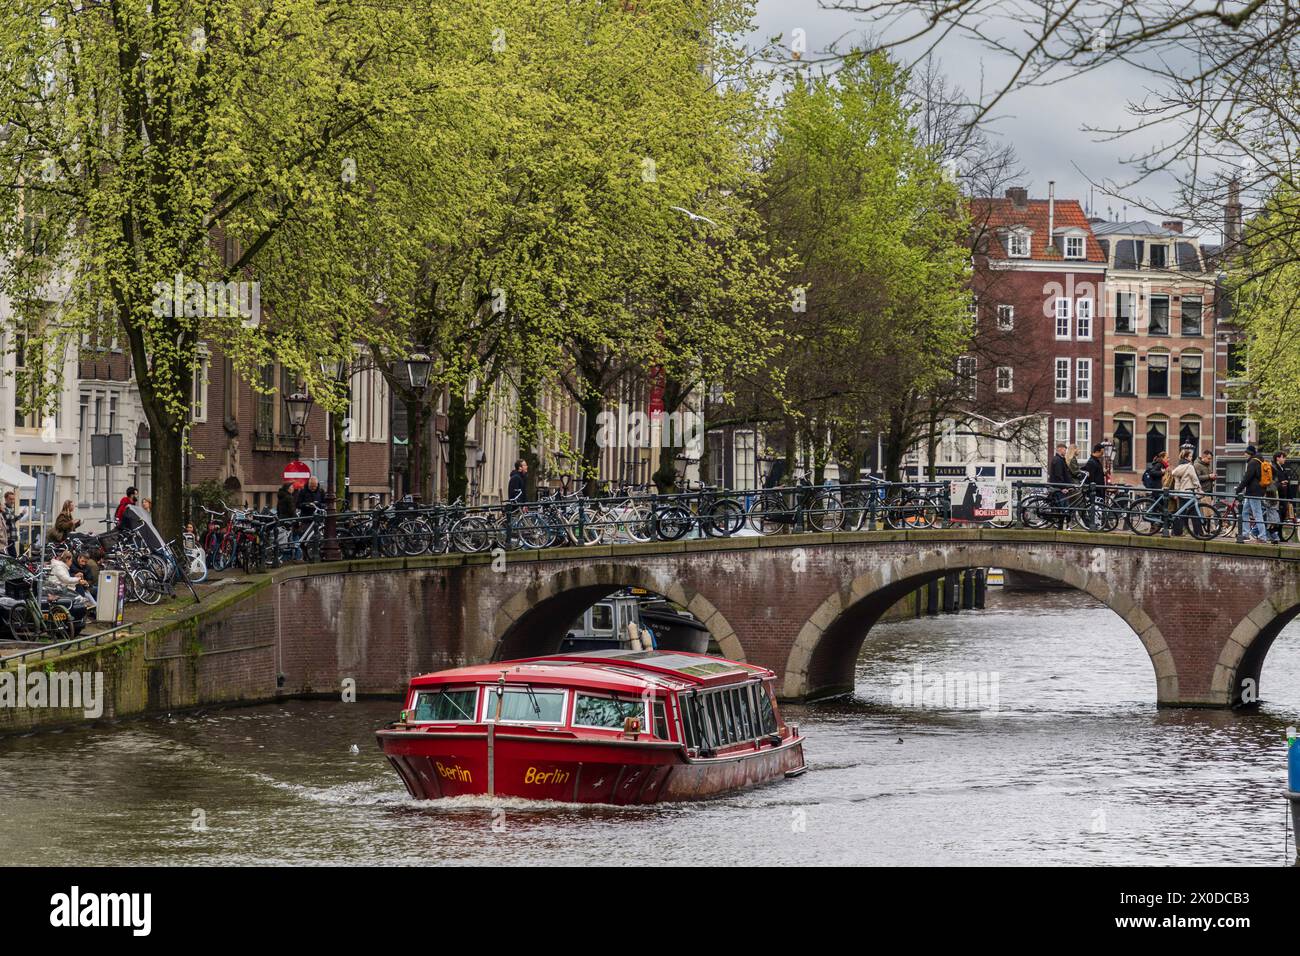 Pont sur le canal, Berenstraat, Amsterdam, pays-Bas Banque D'Images